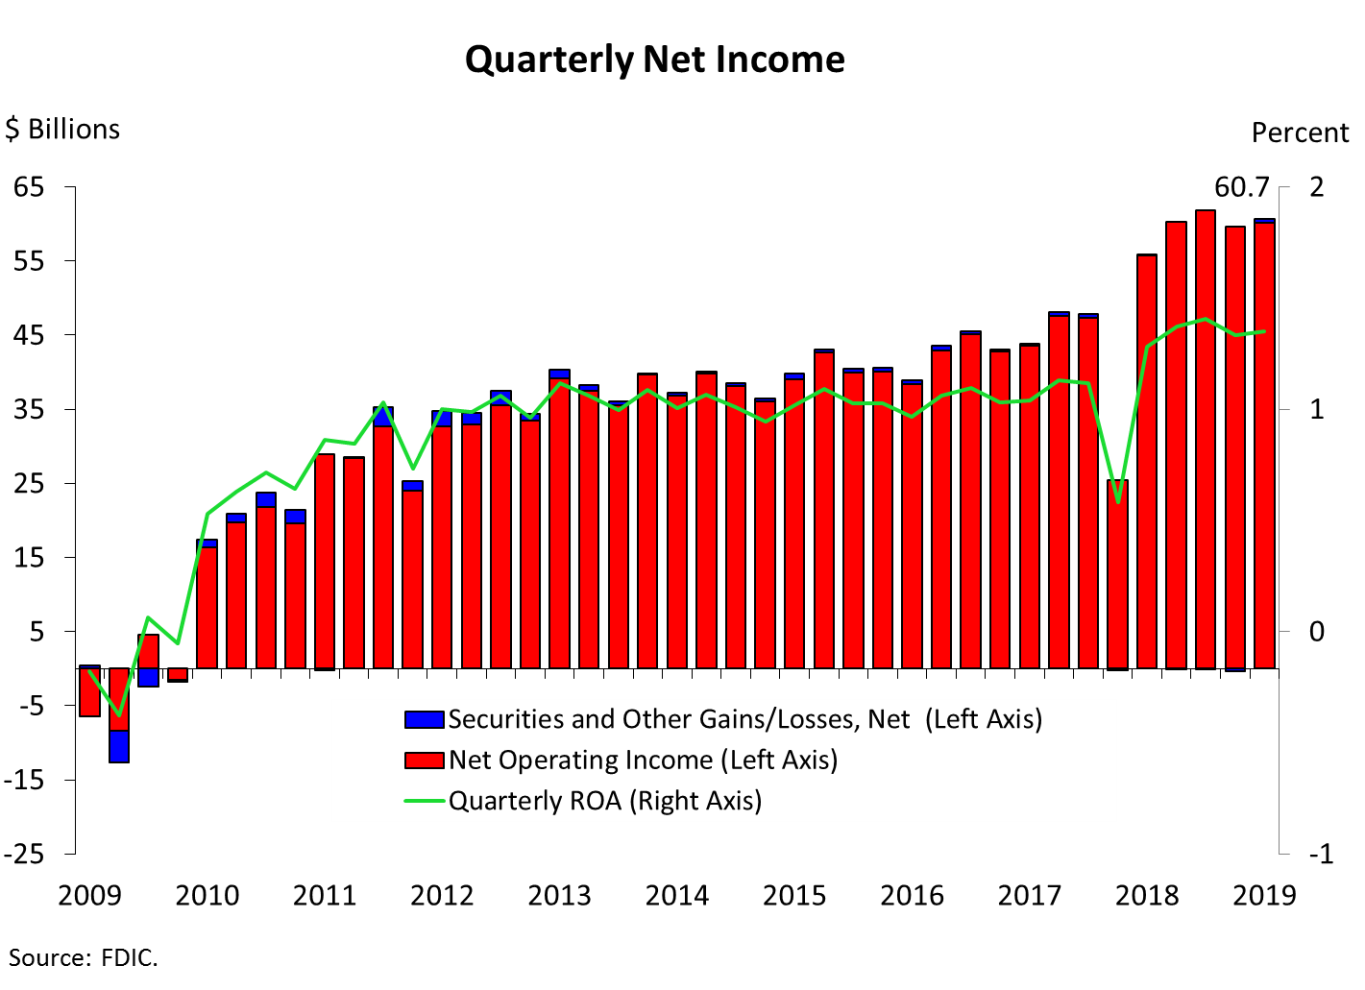 Chart 1: Quarterly Net Income